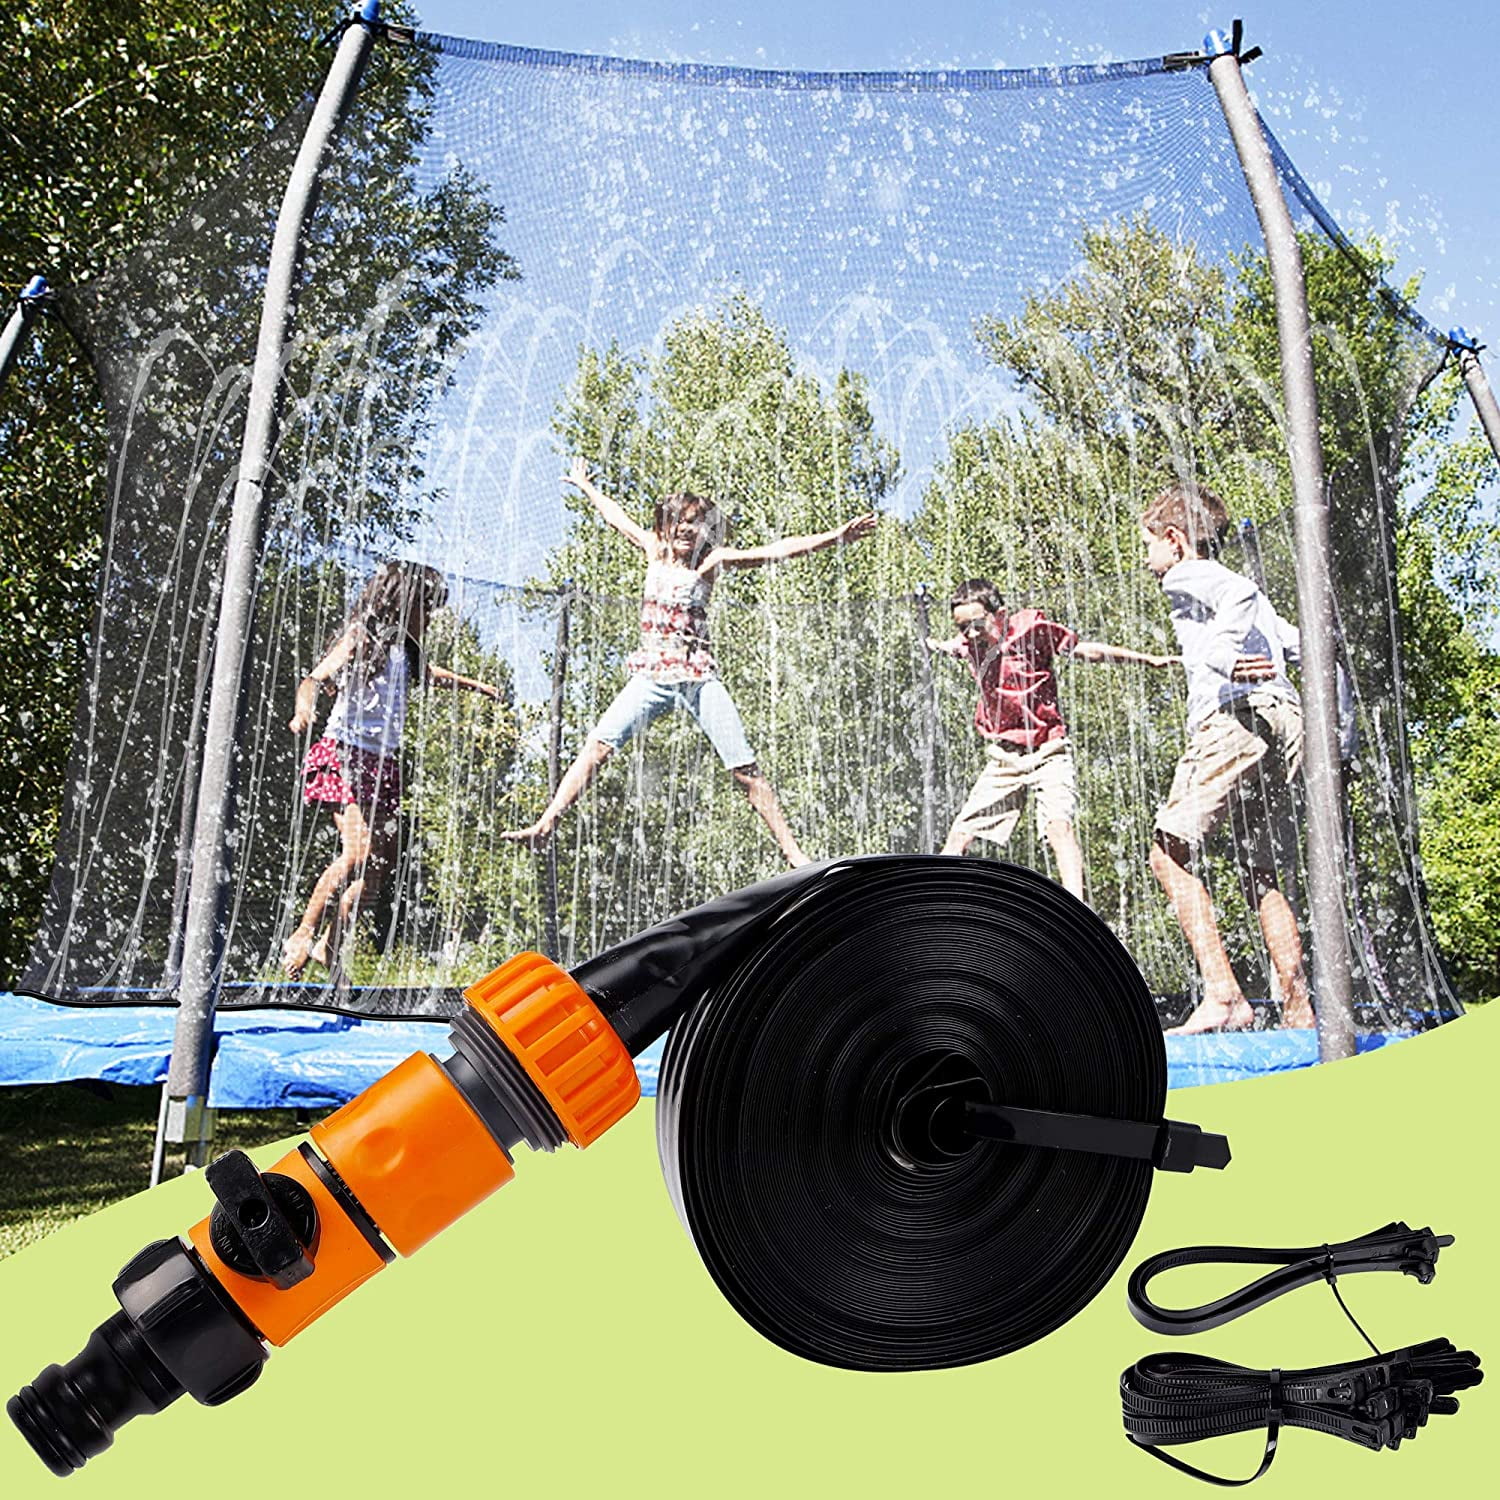 Trampoline Sprinklers, Outdoor Trampoline Spray Water Toys for Kids Backyard Water Park Play Fun Toys Boys Girls Trampoline Accessories Summer (26 ft)